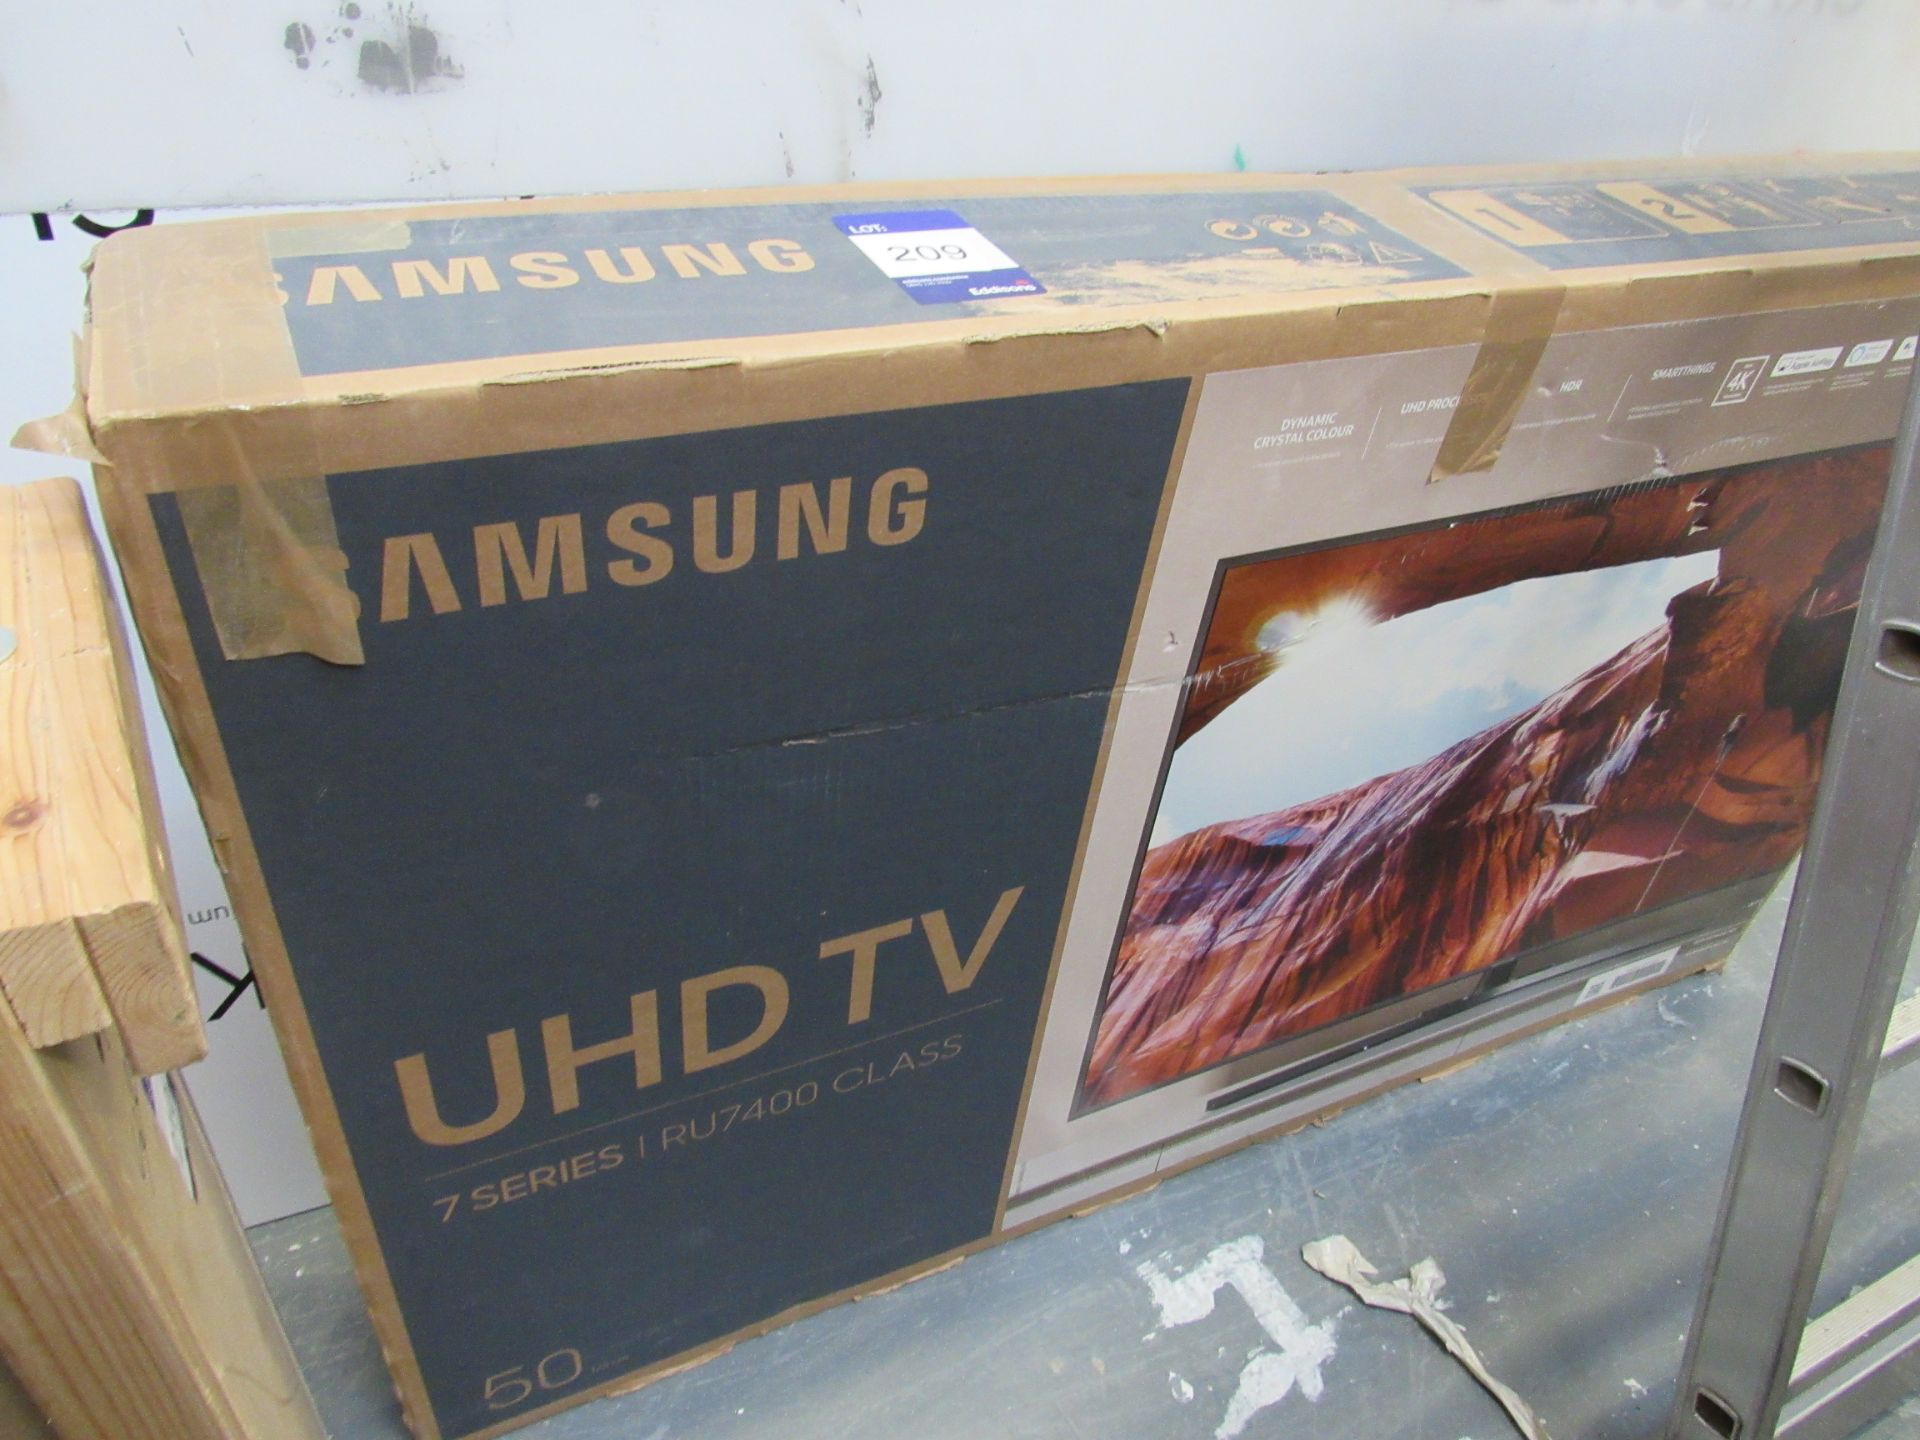 Samsung RU7400 50” UHD TV - Image 2 of 2